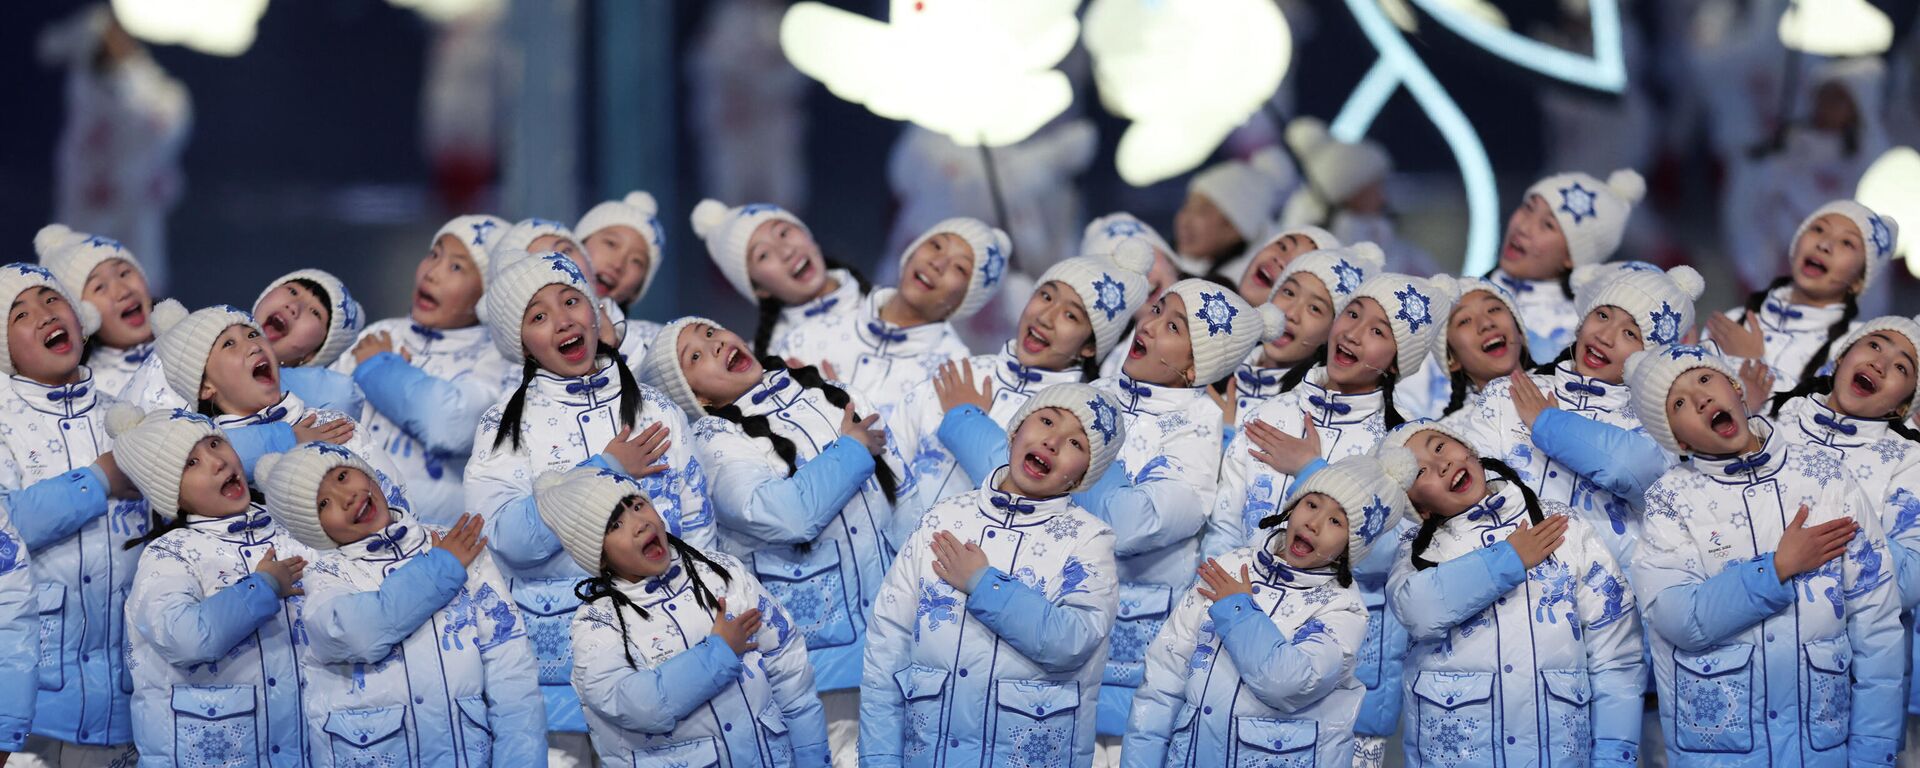 2022 Beijing Olympics - Opening Ceremony - National Stadium, Beijing, China - February 4, 2022. Performers during the opening ceremony.  - Sputnik International, 1920, 04.02.2022